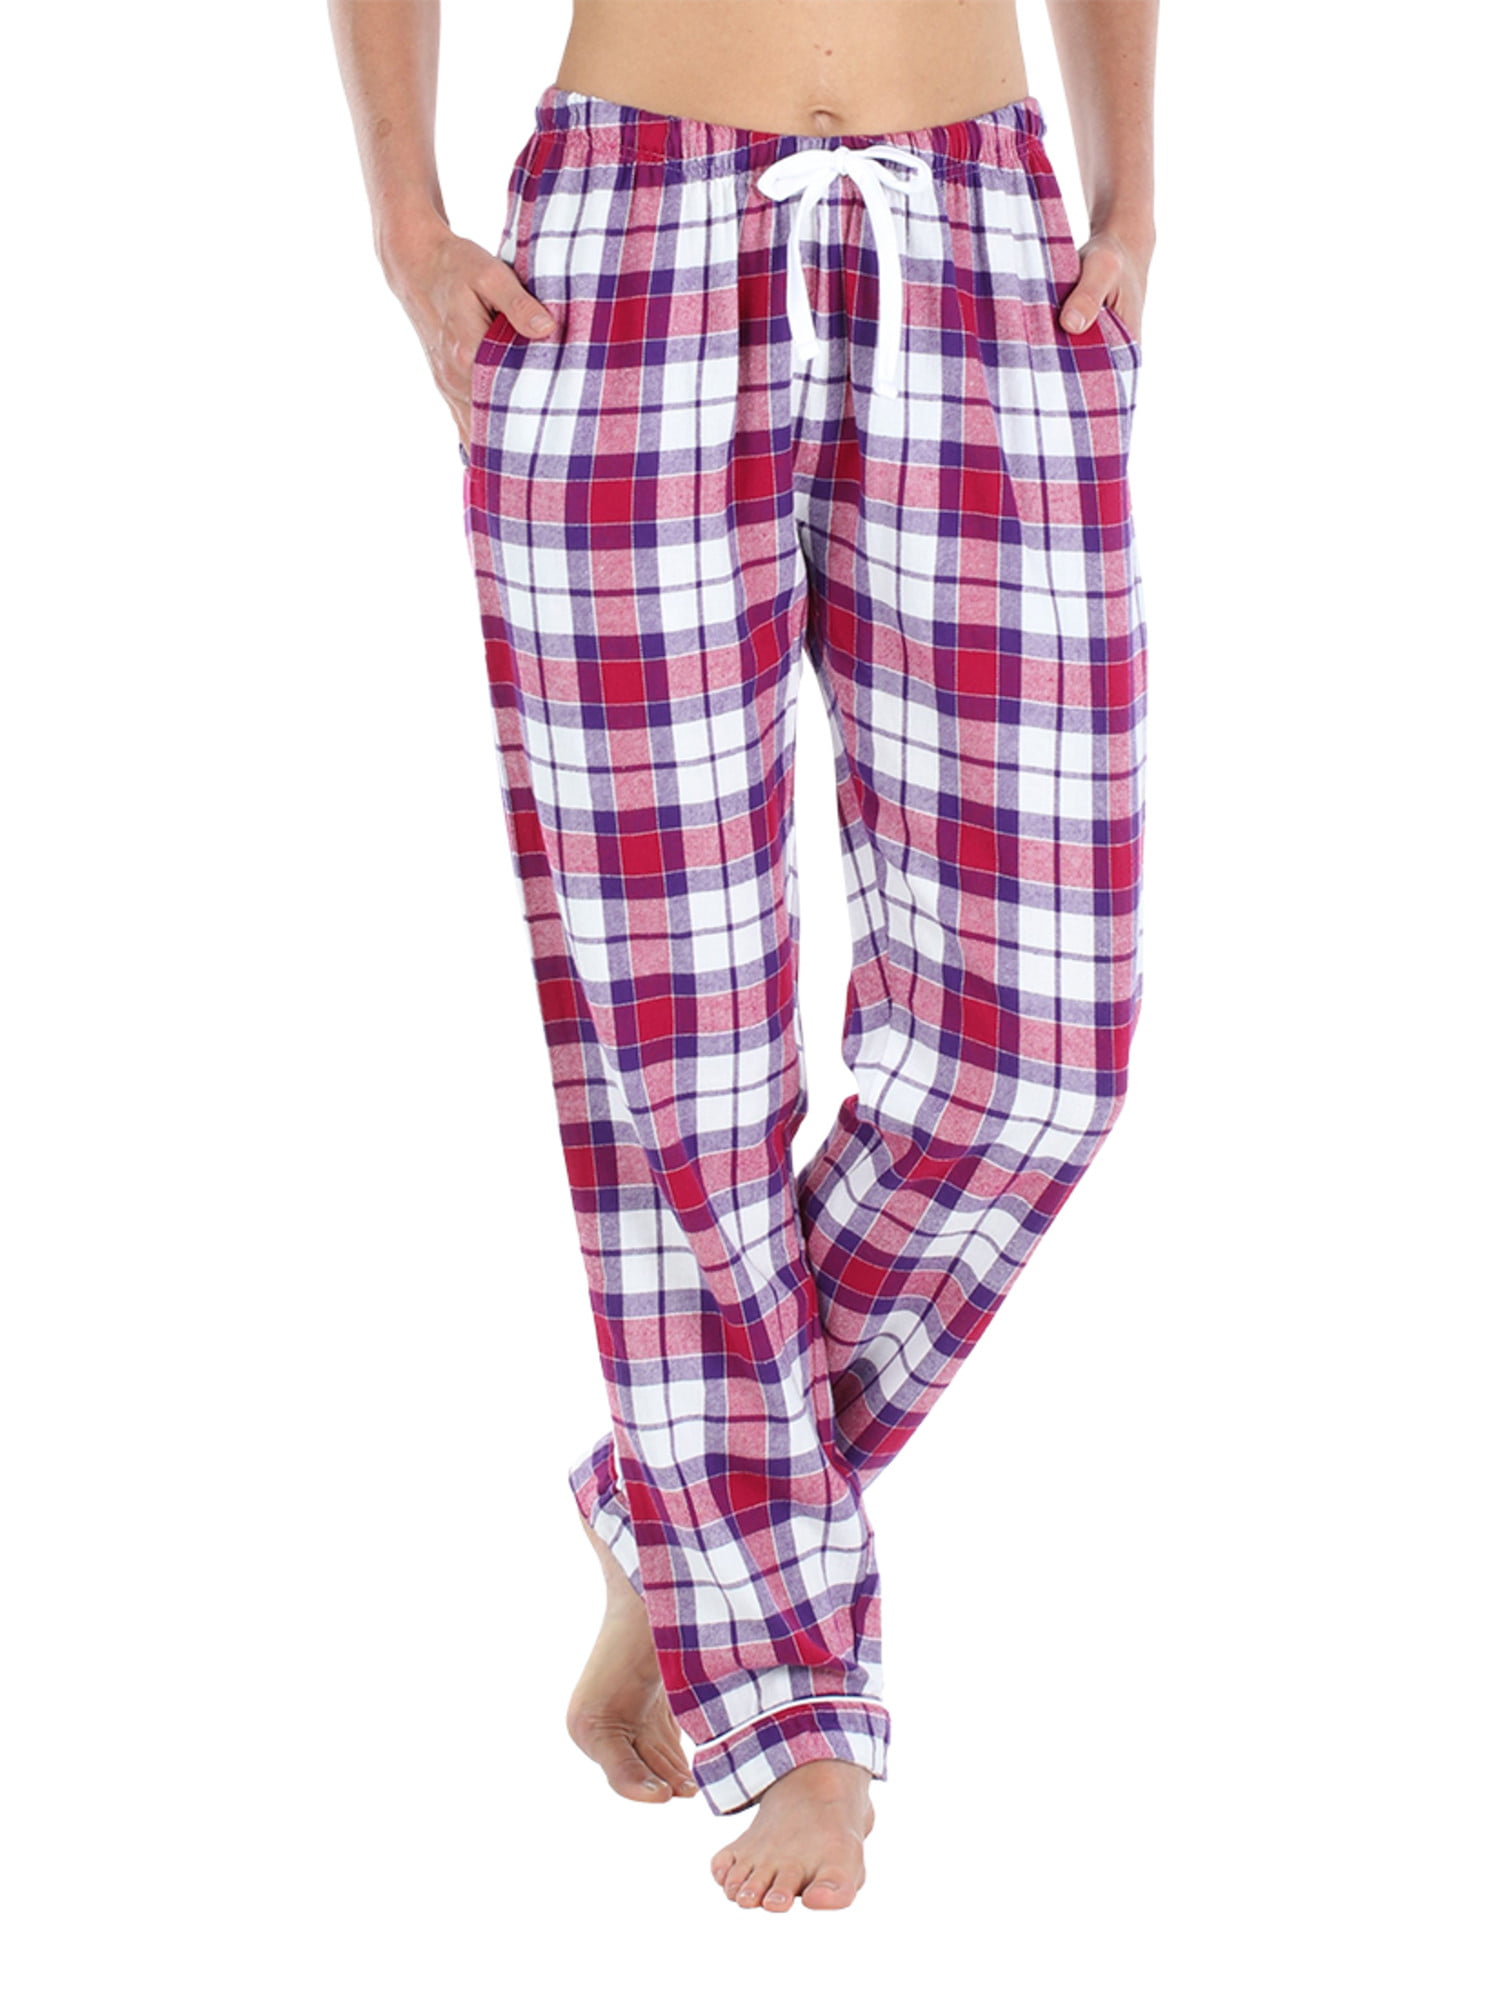 PMF1001-2081-EU-MED Bird Toile PajamaMania Women’s Cotton Flannel Pyjama PJ Pants Bottoms 